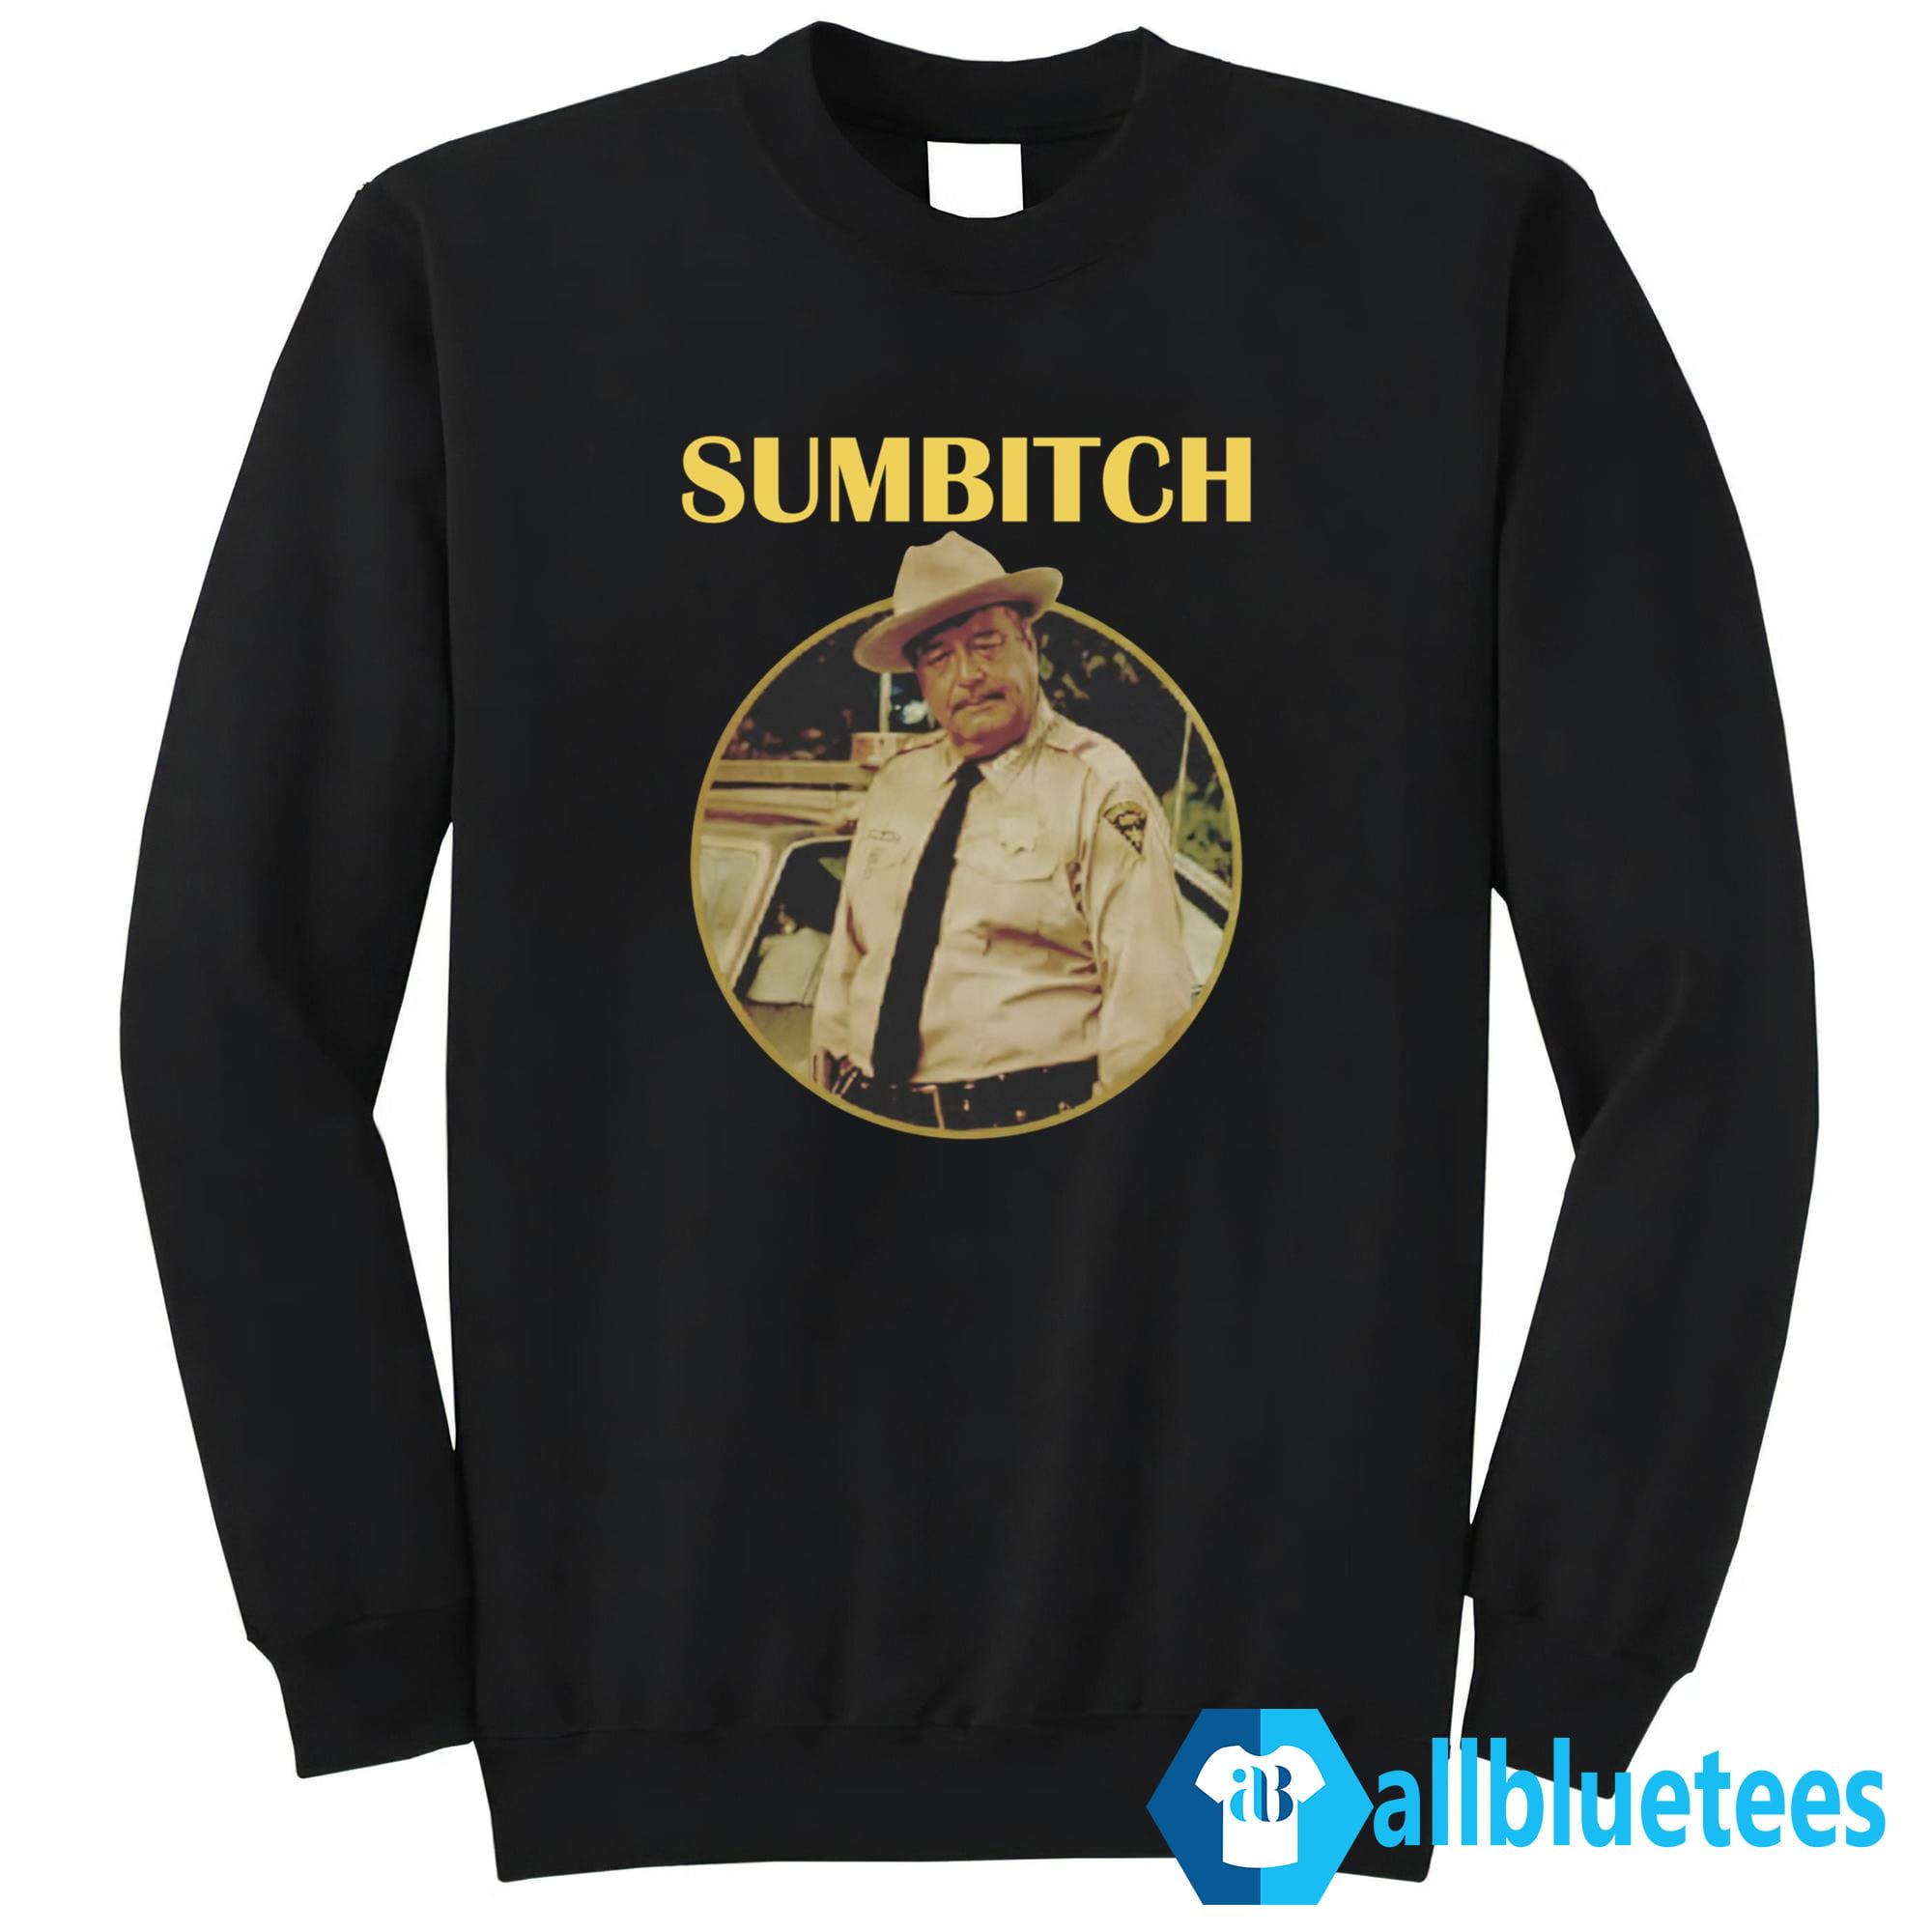 you sumbitch